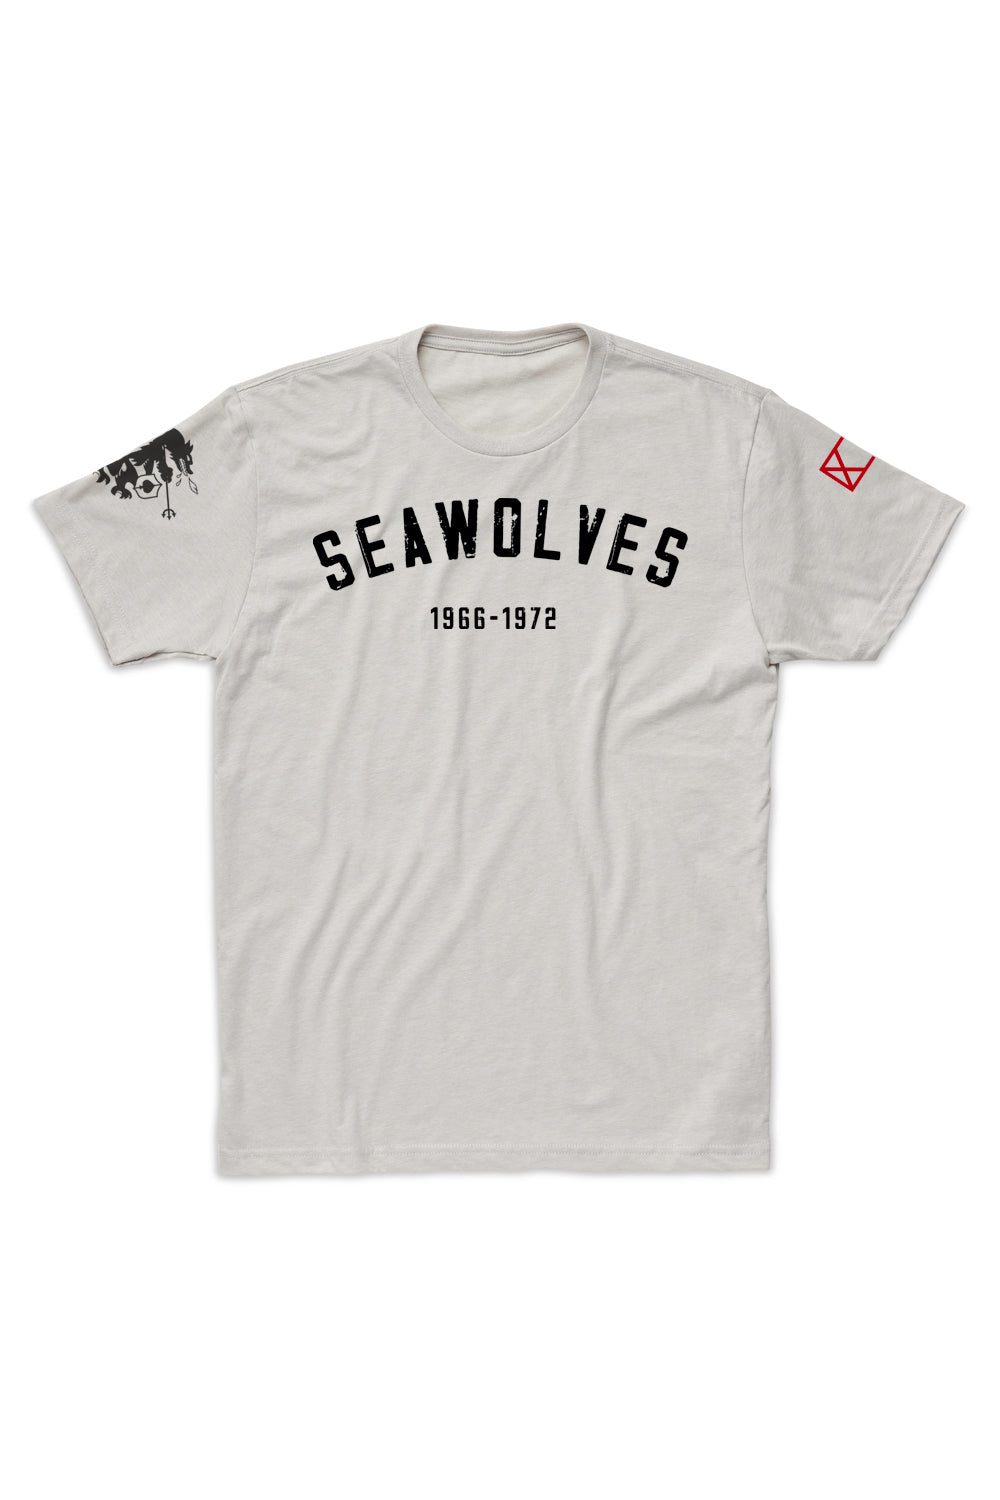 Seawolves - July '21